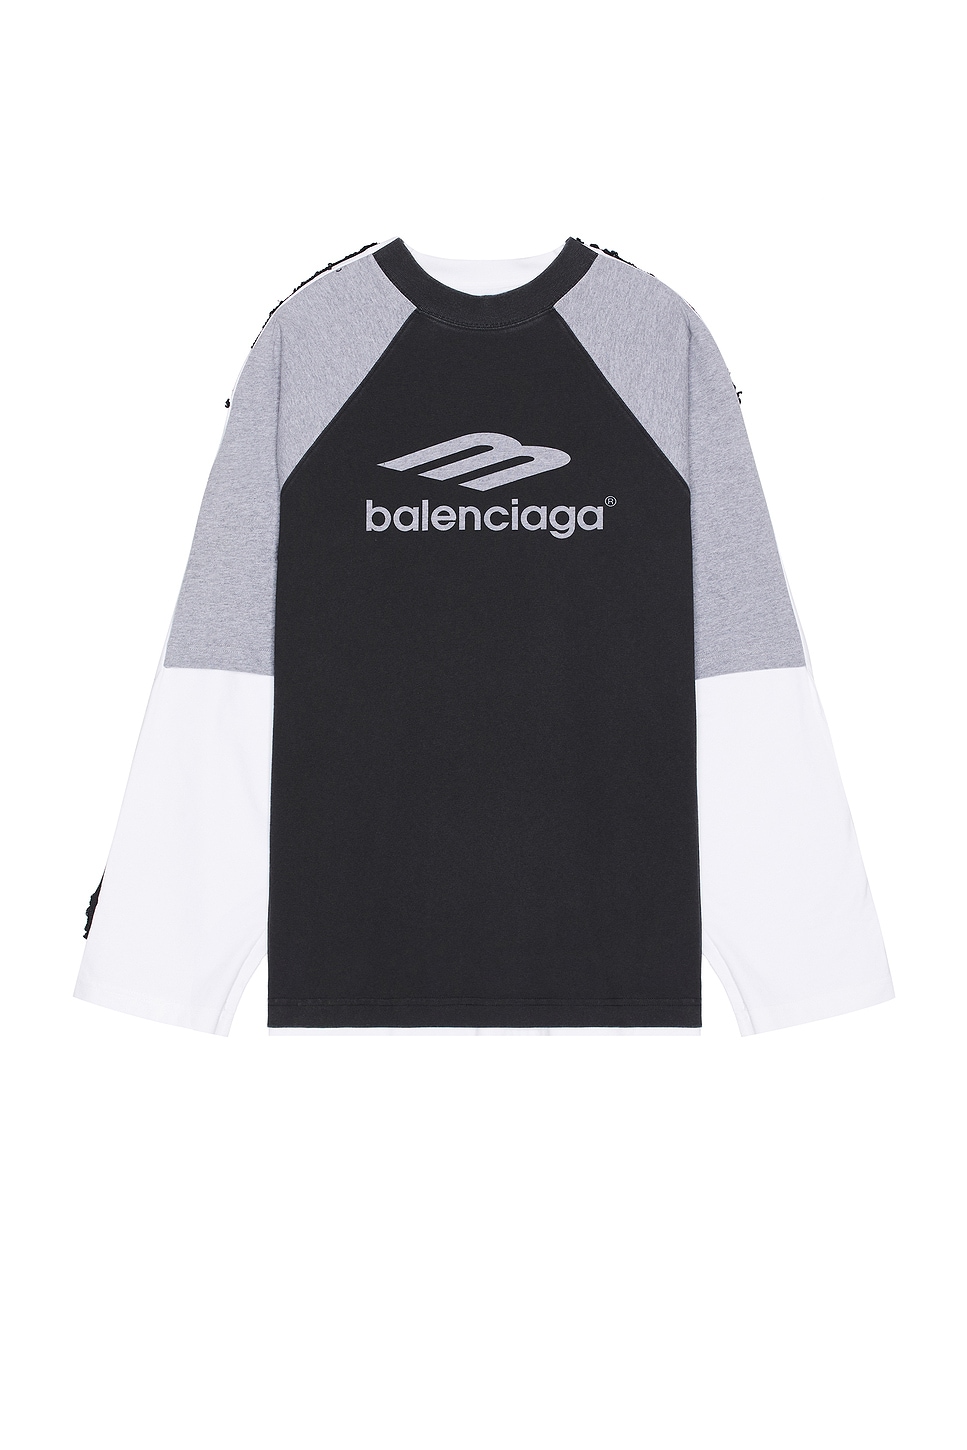 Balenciaga Hybrid Large Sweater In Black  White  & Grey